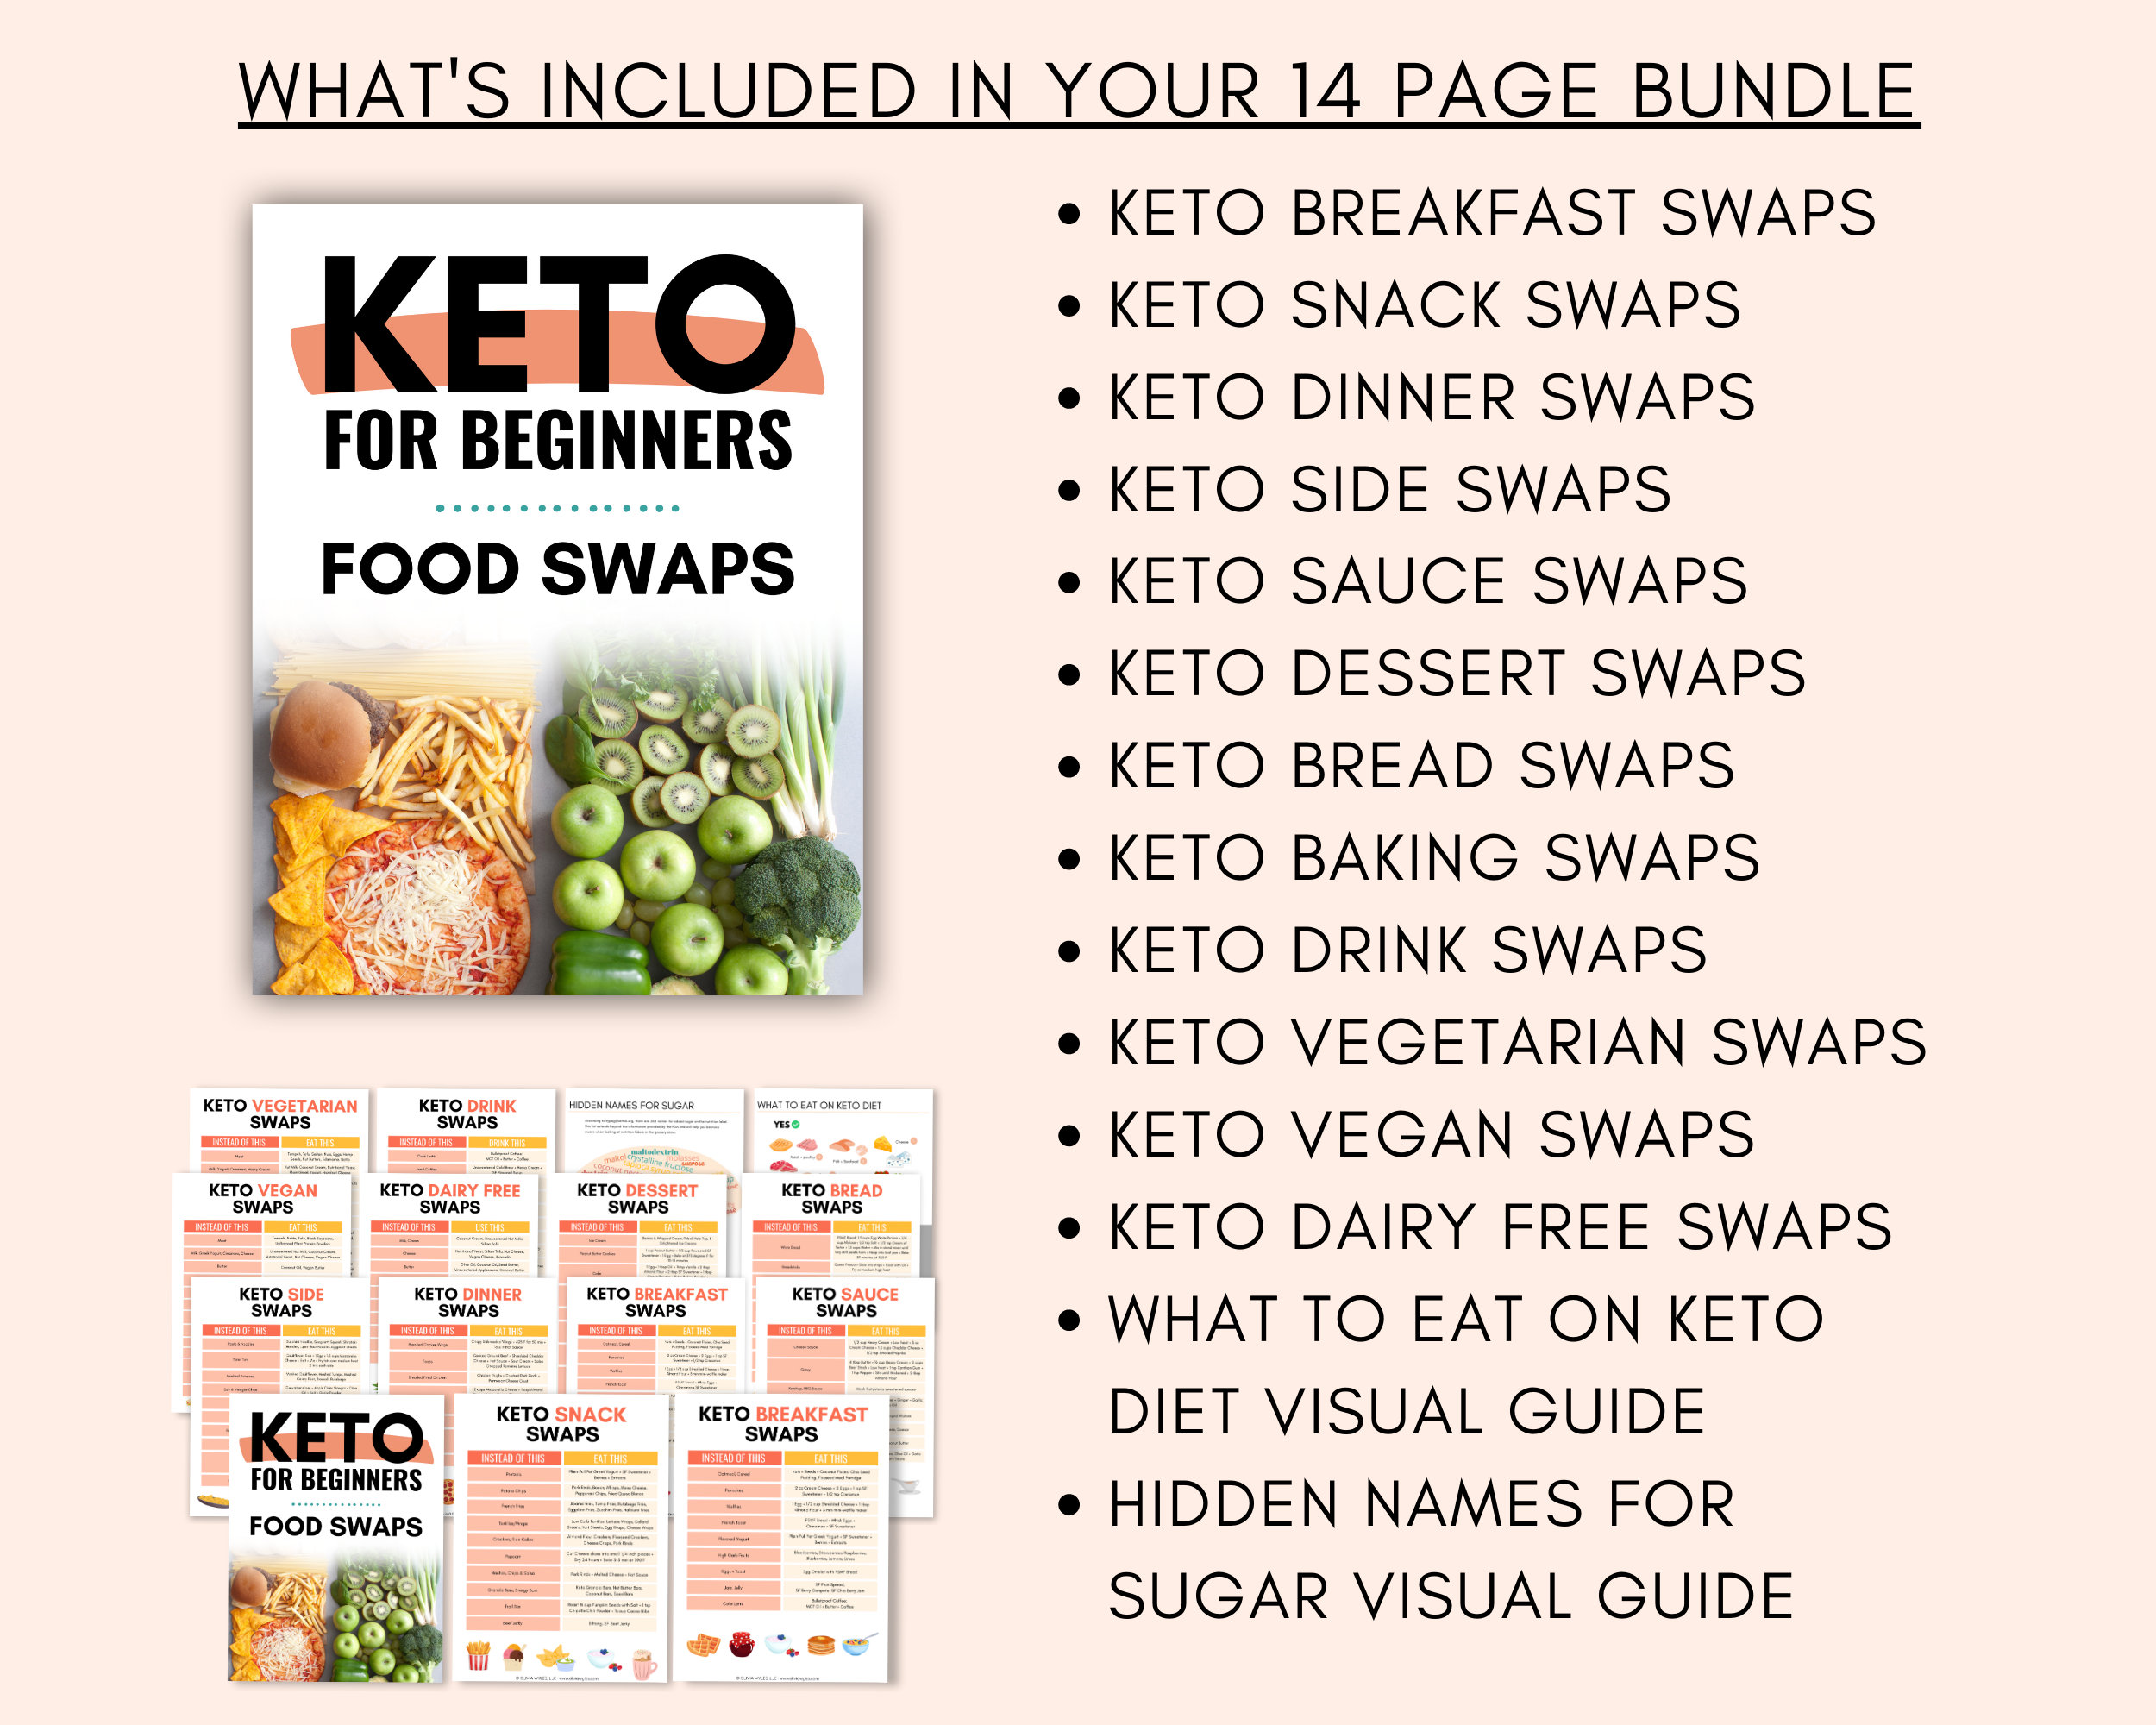 Keto for Beginners: Food Swaps, Keto Food, Keto for Beginners, Keto ...